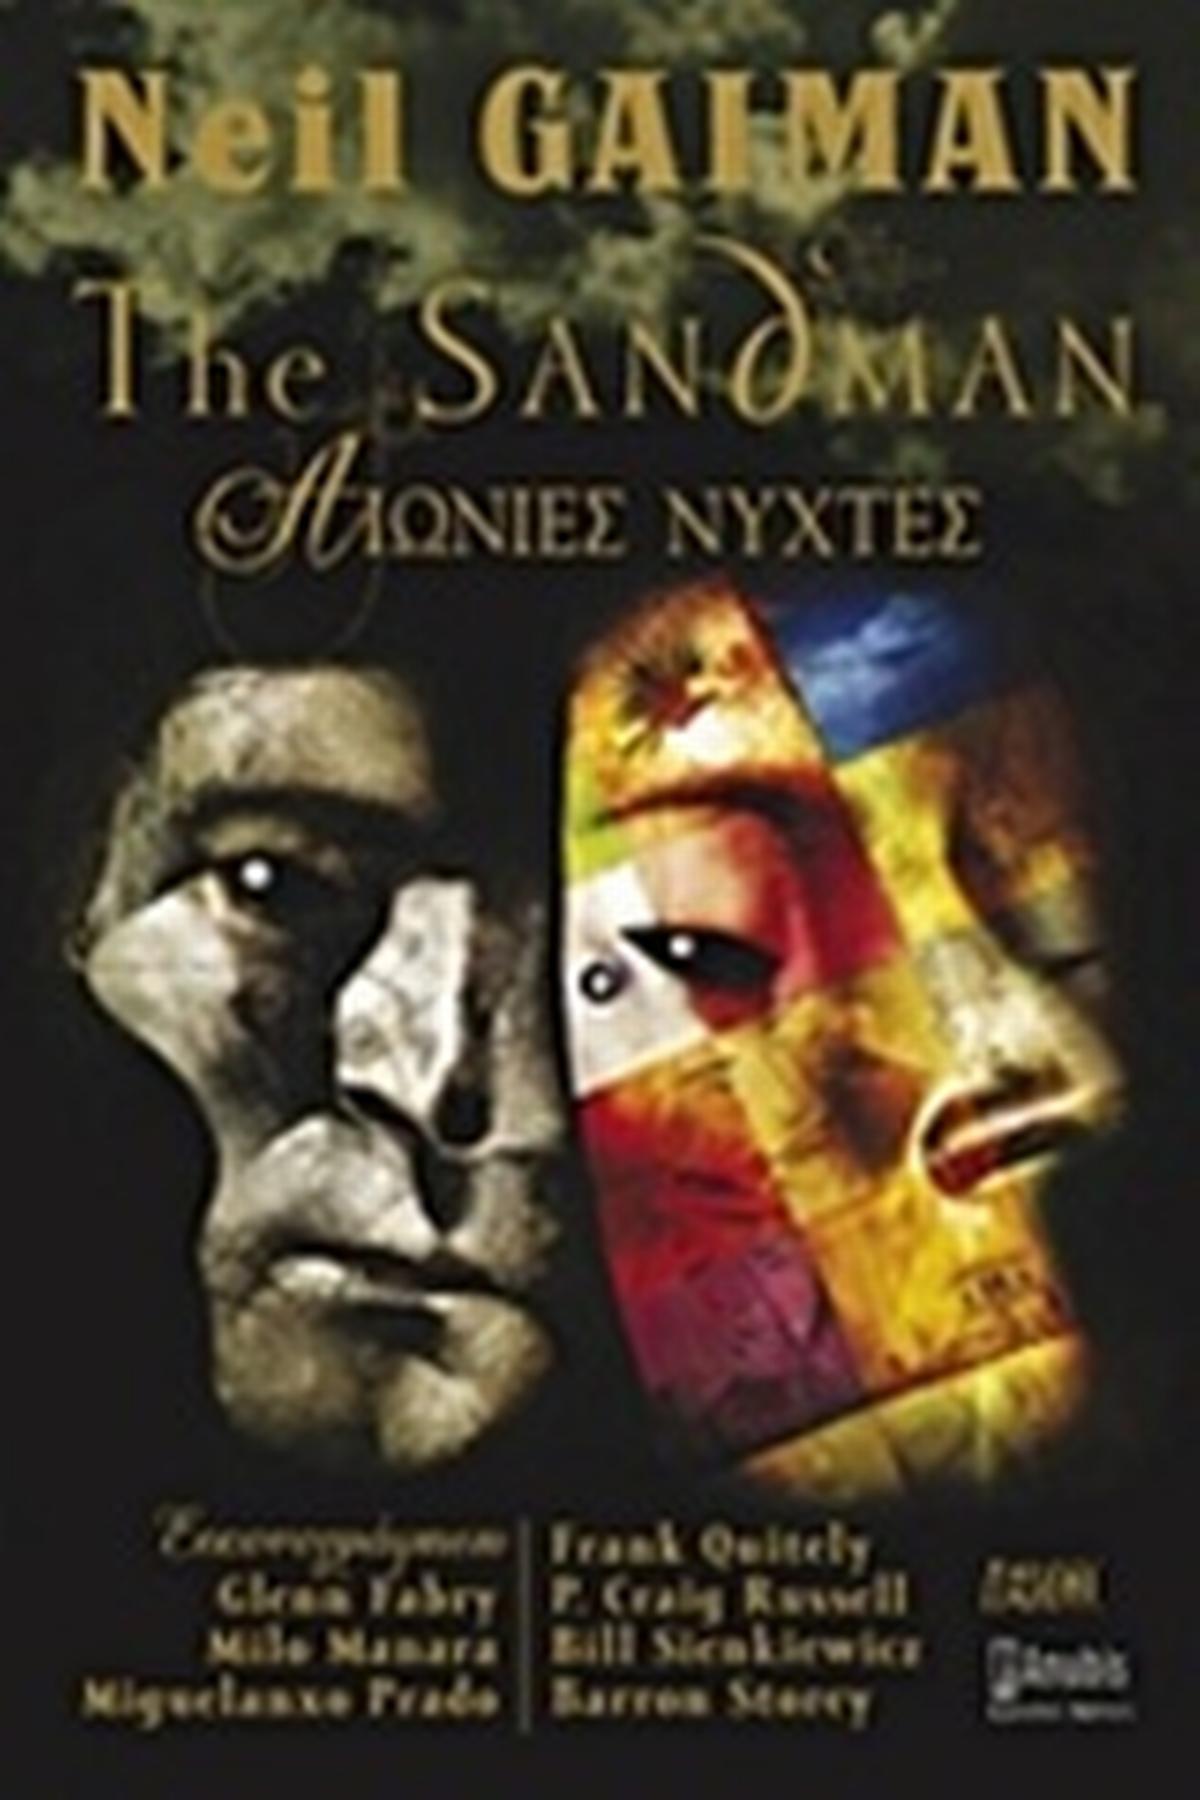 The Sandman: Αιώνιες νύχτες